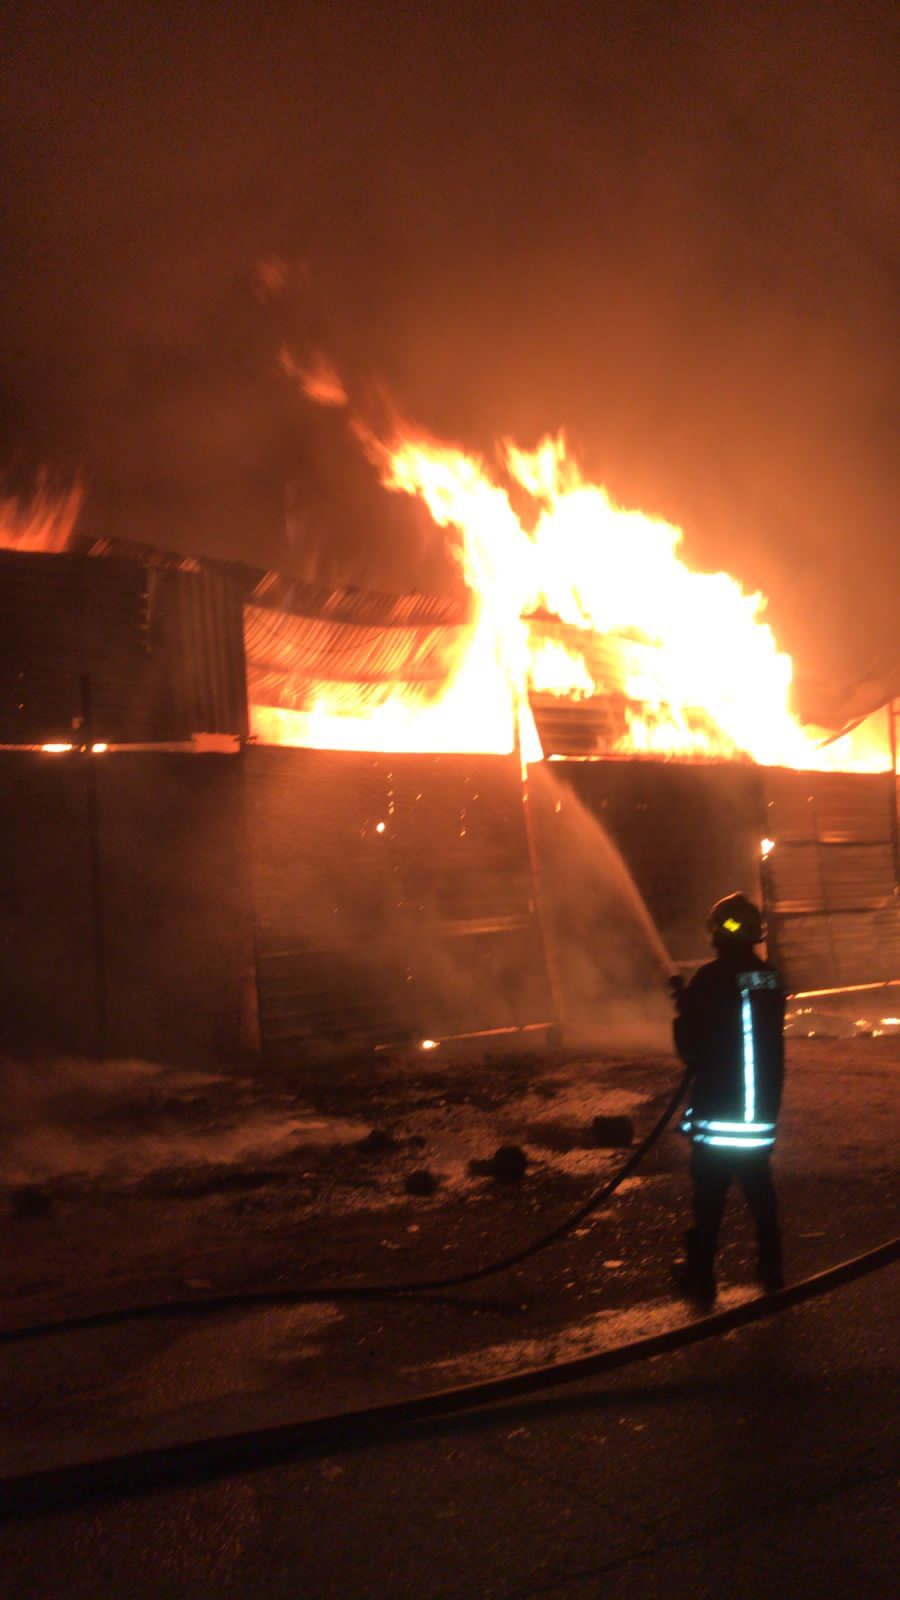  وفاتان و5 إصابات بحريق مخازن “بوليسترين” في عمان